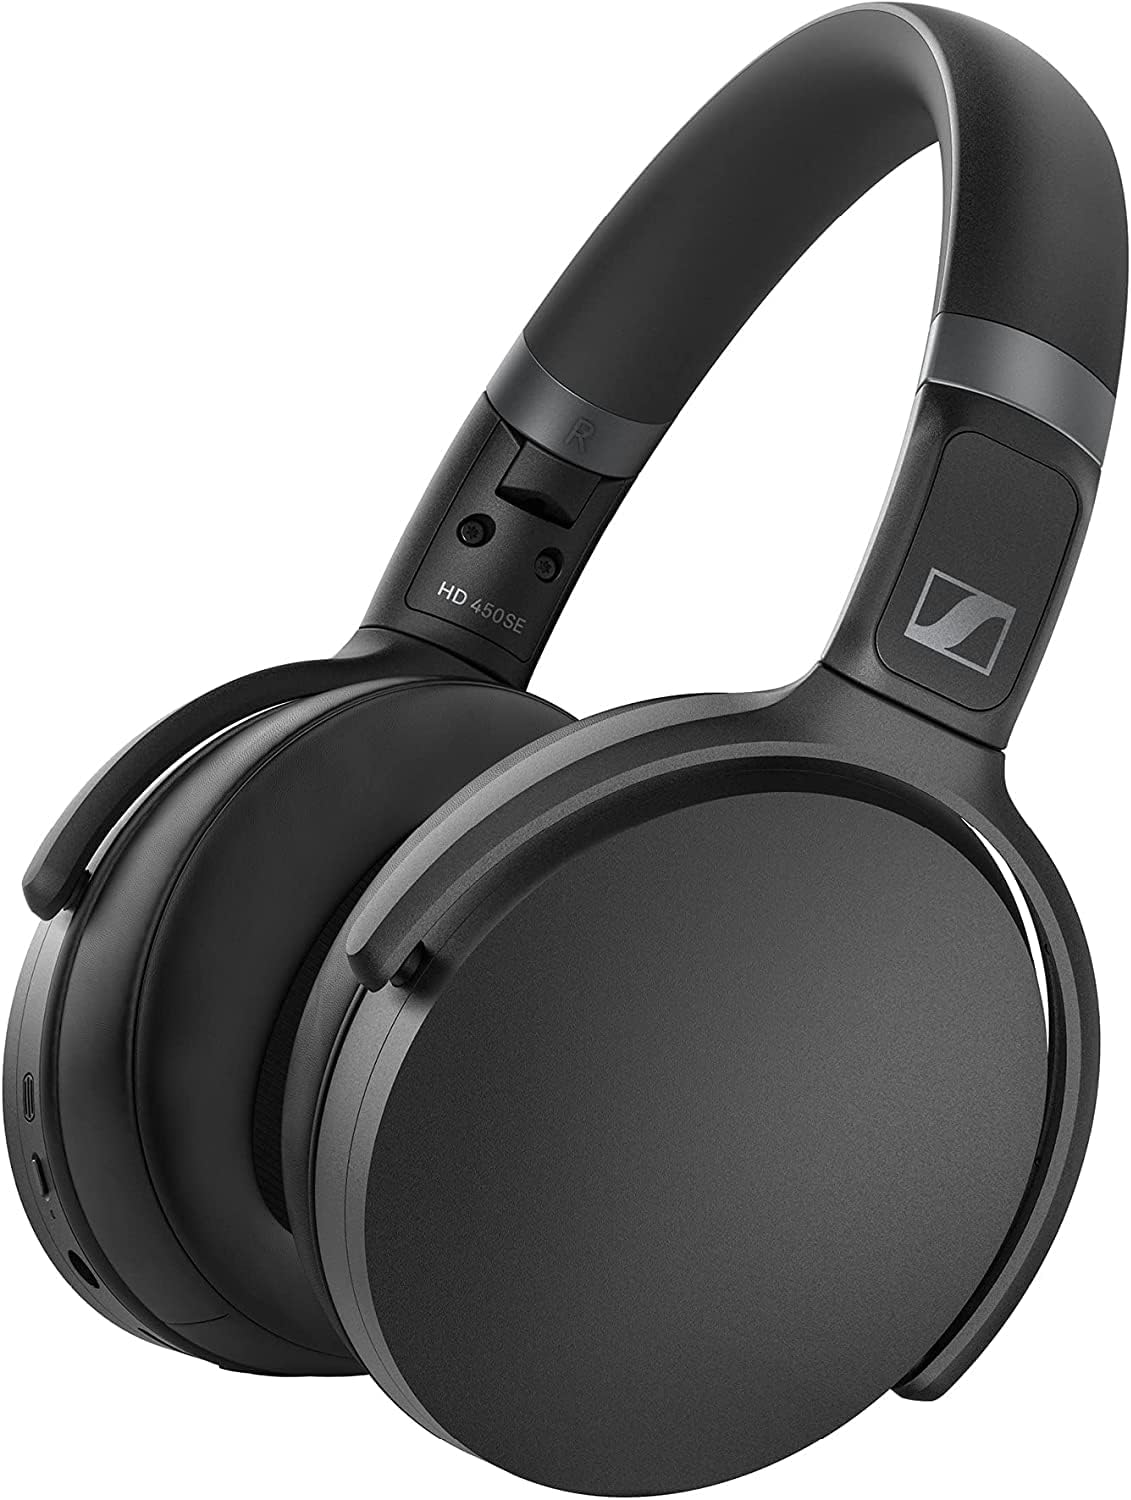 Sennheiser Consumer Audio HD 450SE Black Bluetooth 5.0 Wireless Headphone with Alexa Built-in - Active Noise Cancellation